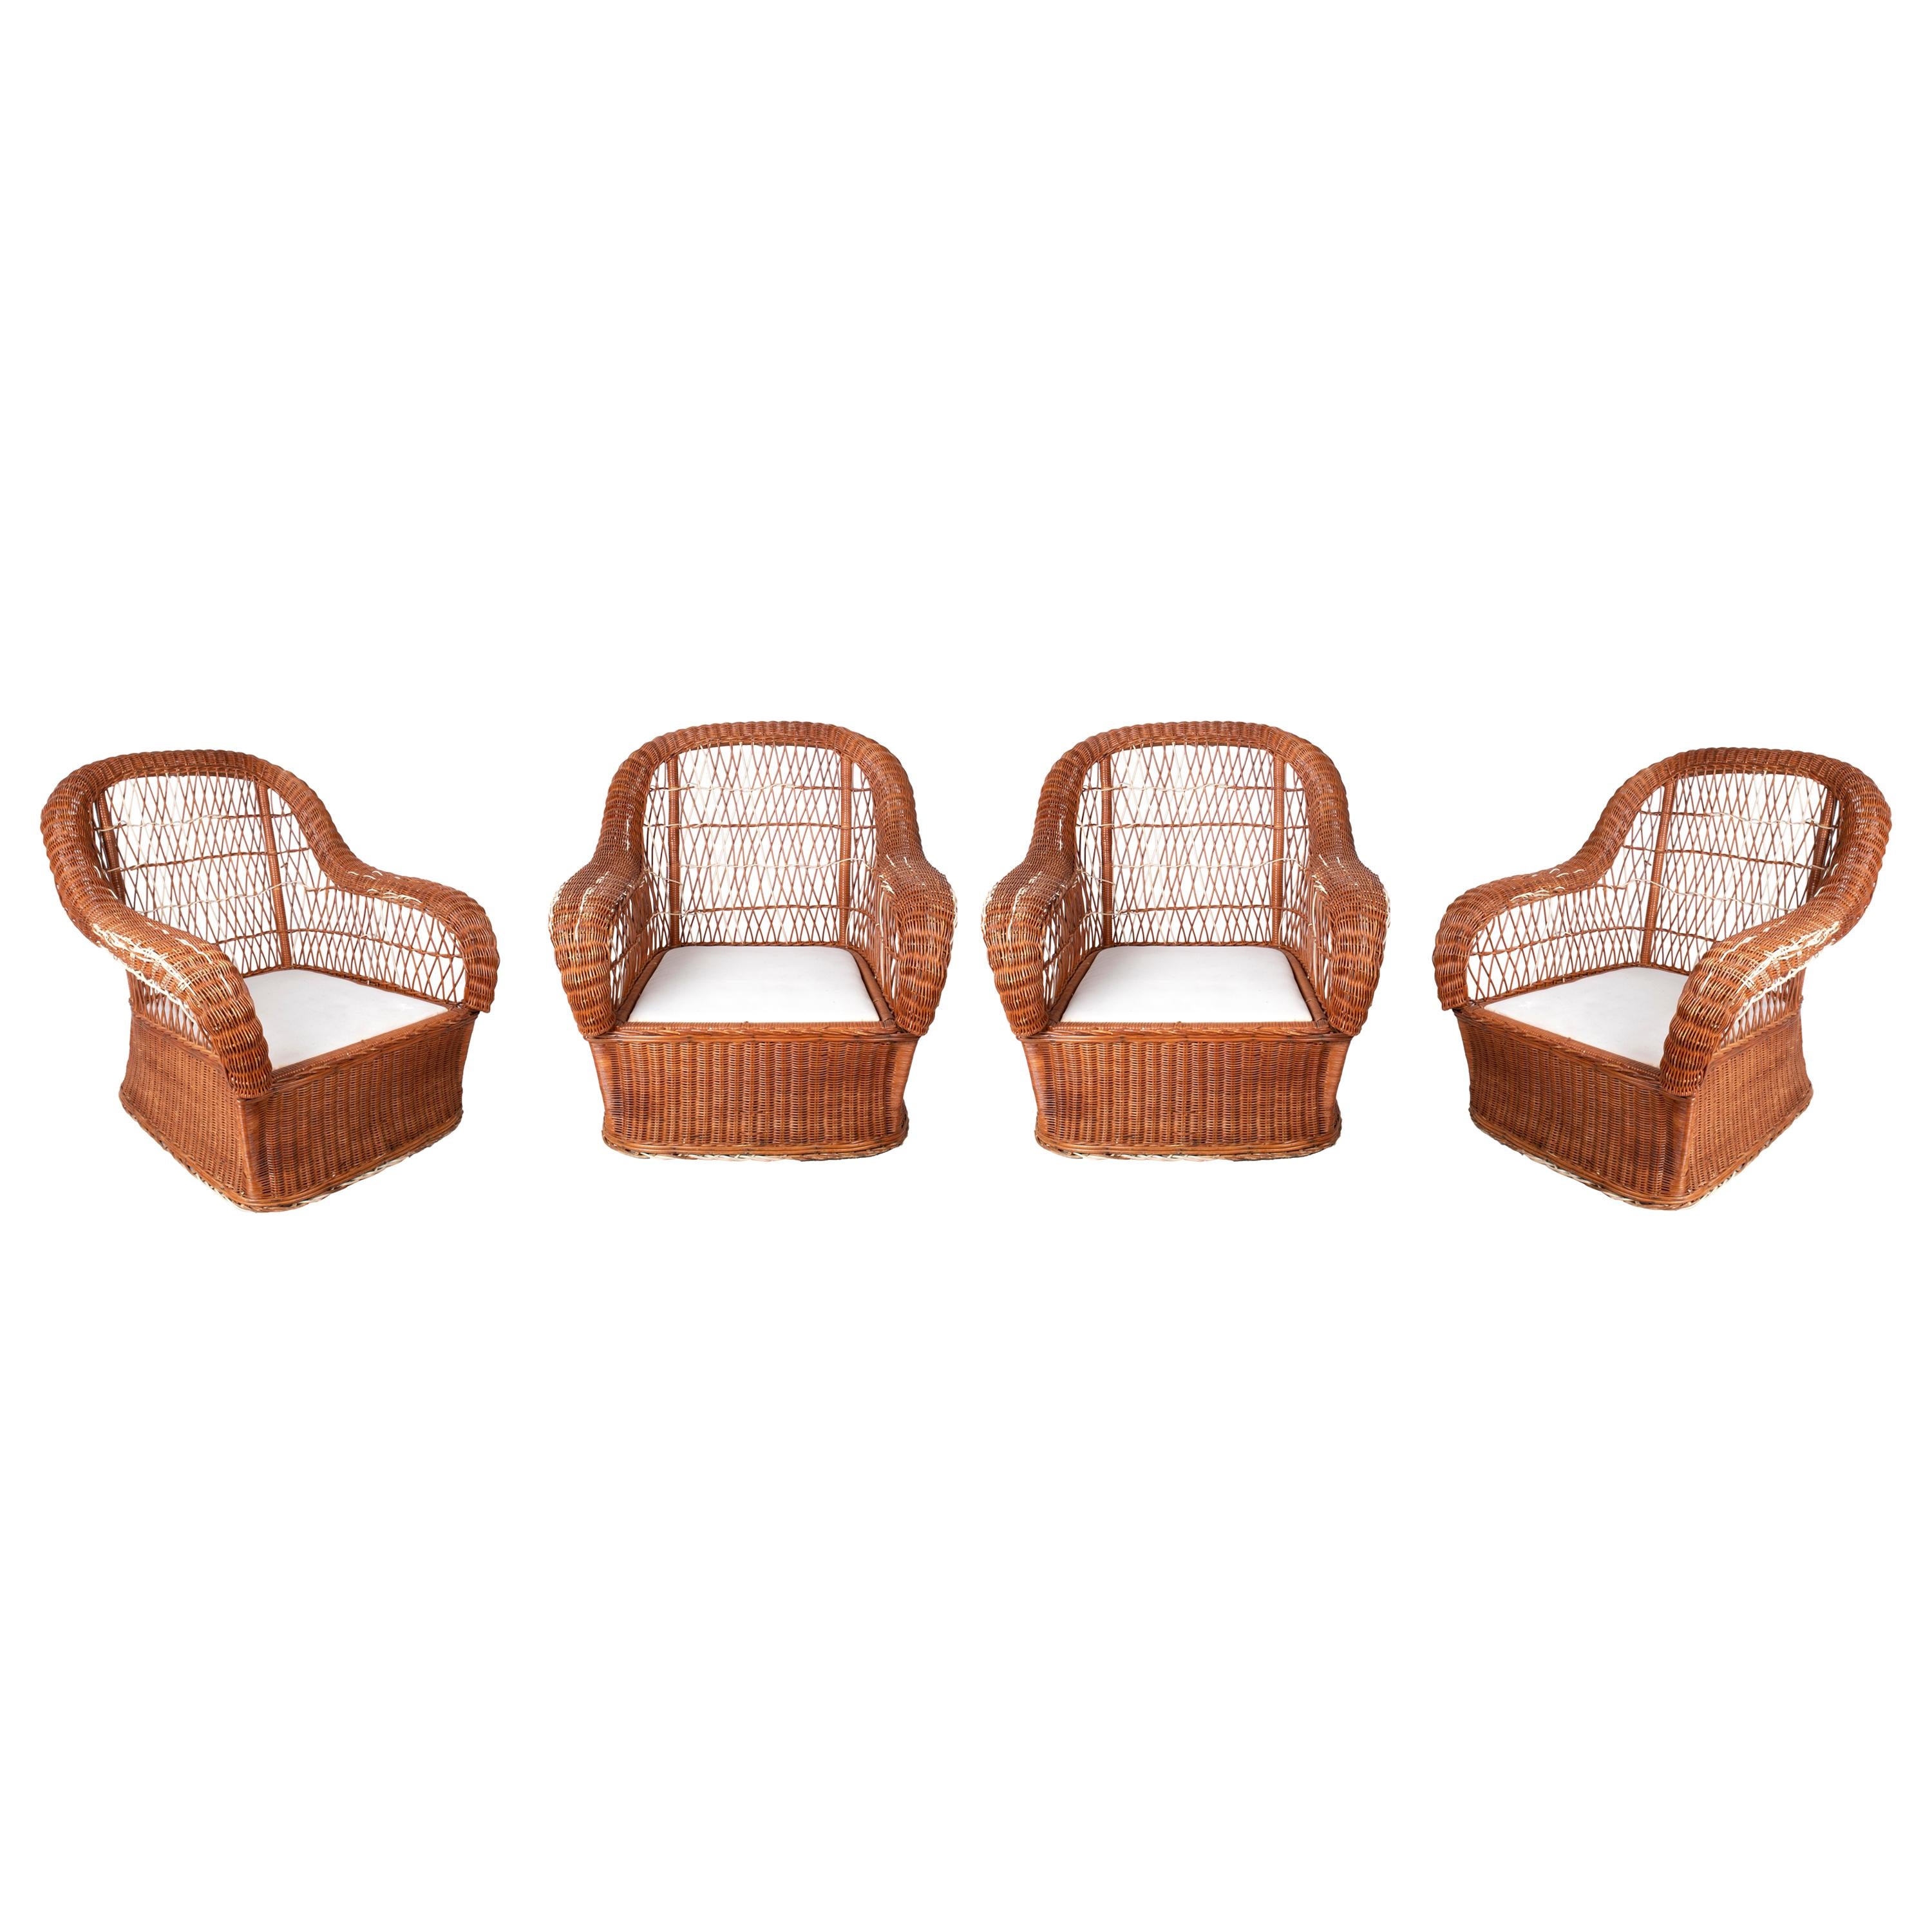 1980s Set of Four Hand Woven Rattan Garden Armchairs